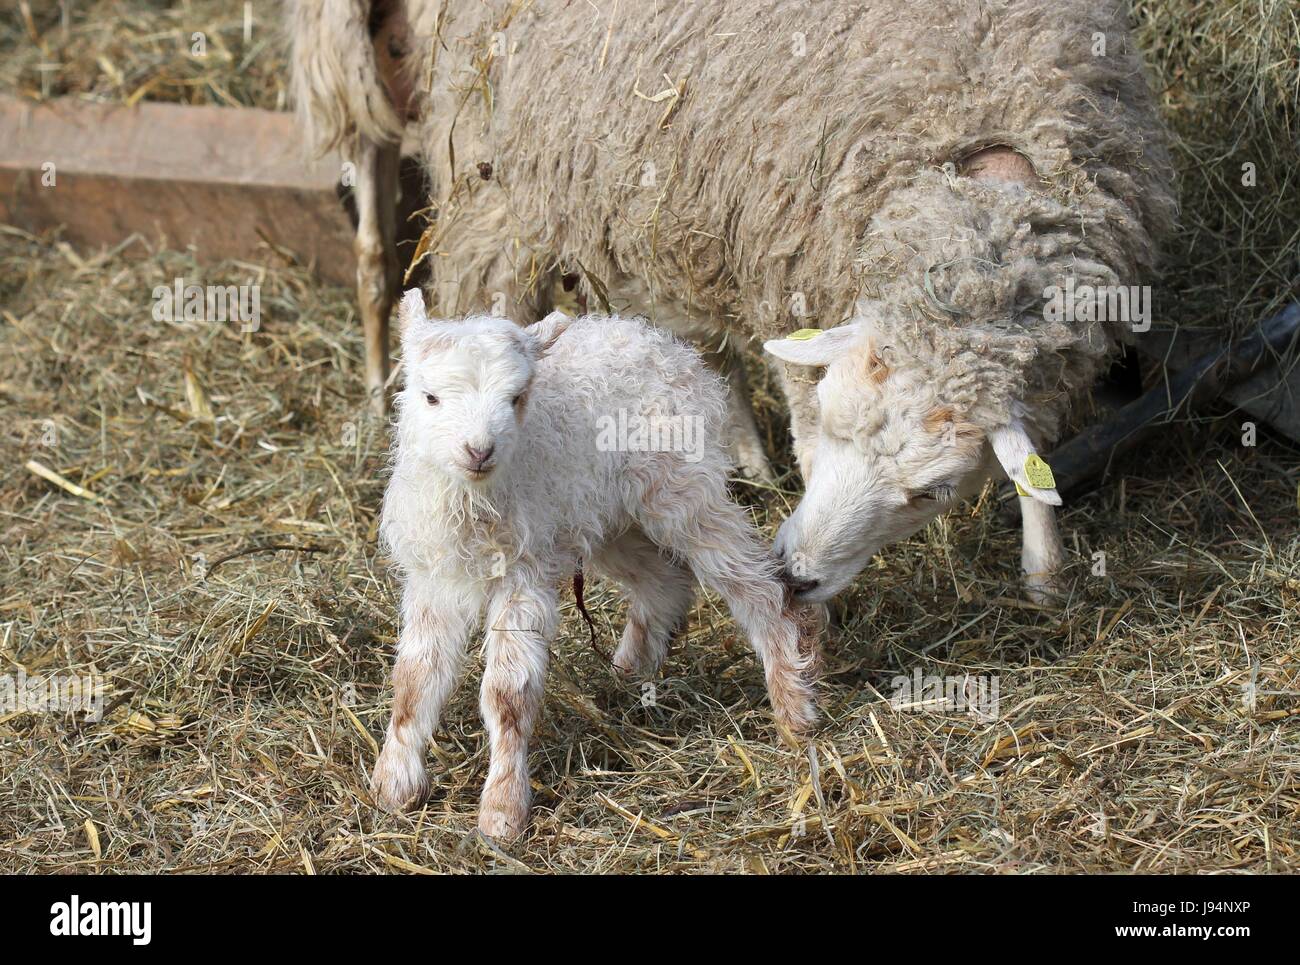 skuddenschaf with newborn lamb Stock Photo